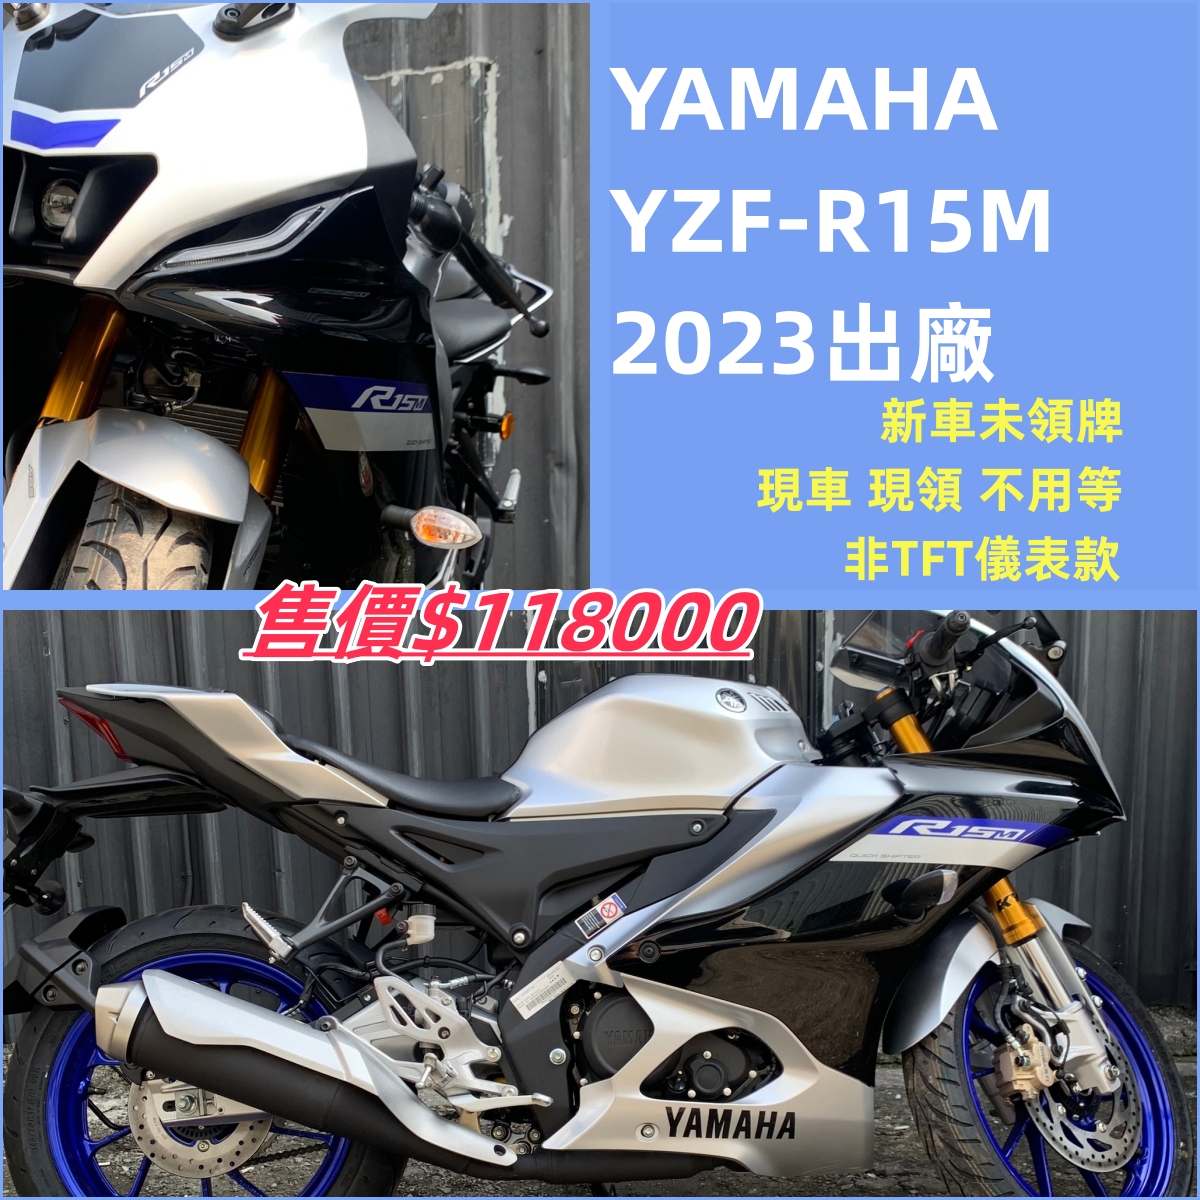 【飛翔國際】YAMAHA R15 M - 「Webike-摩托車市」 【出售車輛】新車 2023 YAMAHA 仿賽 R15M R15V4 檔車 未領牌 跑車